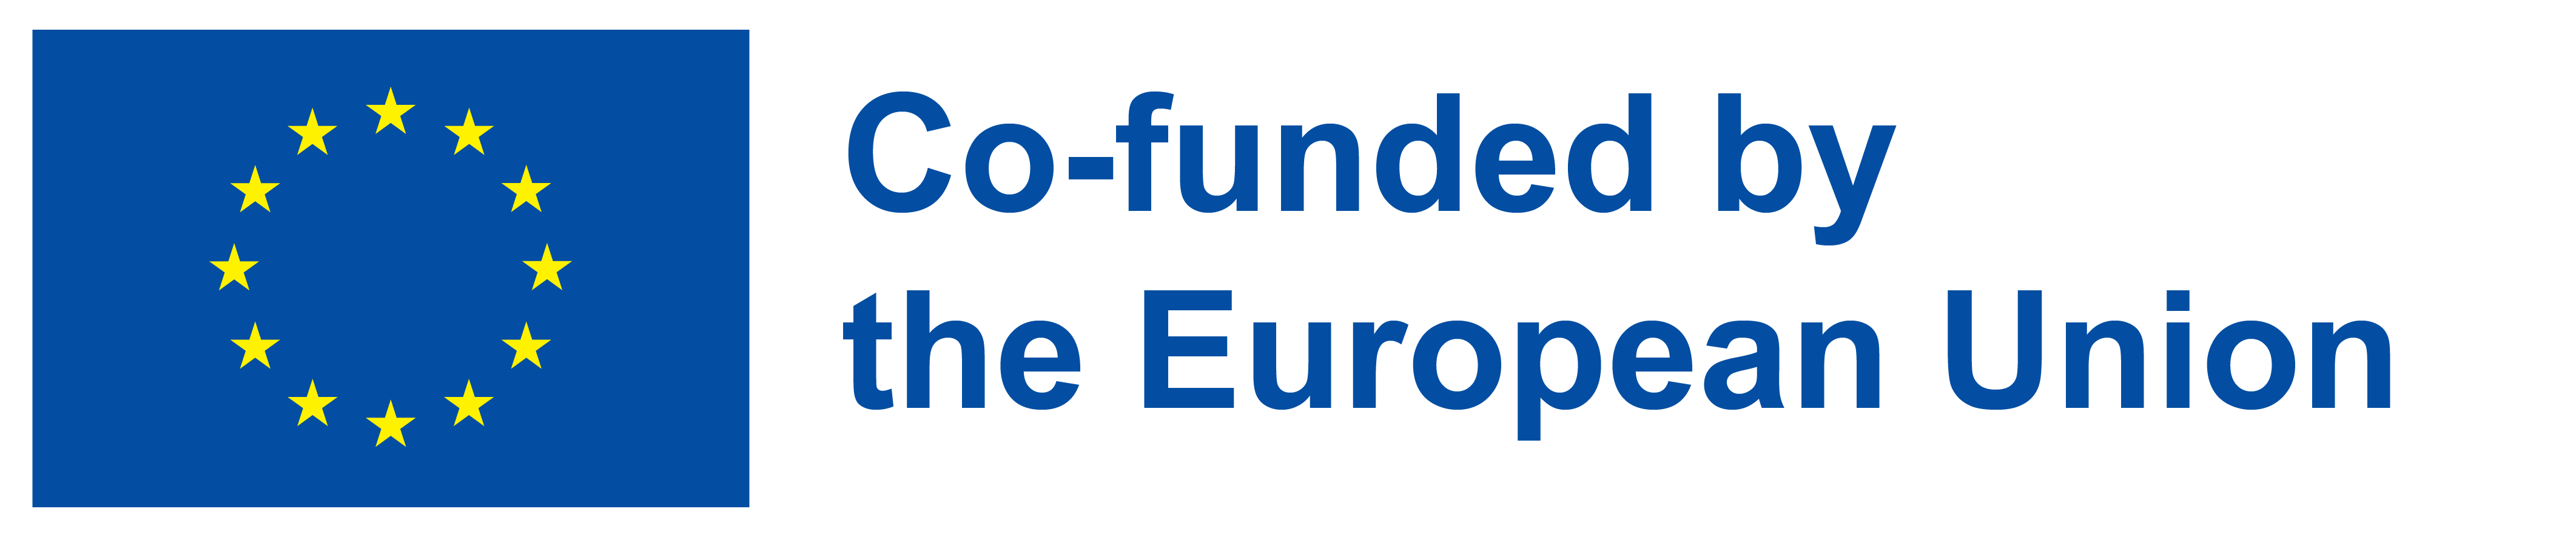 Social Economy Europe Logo